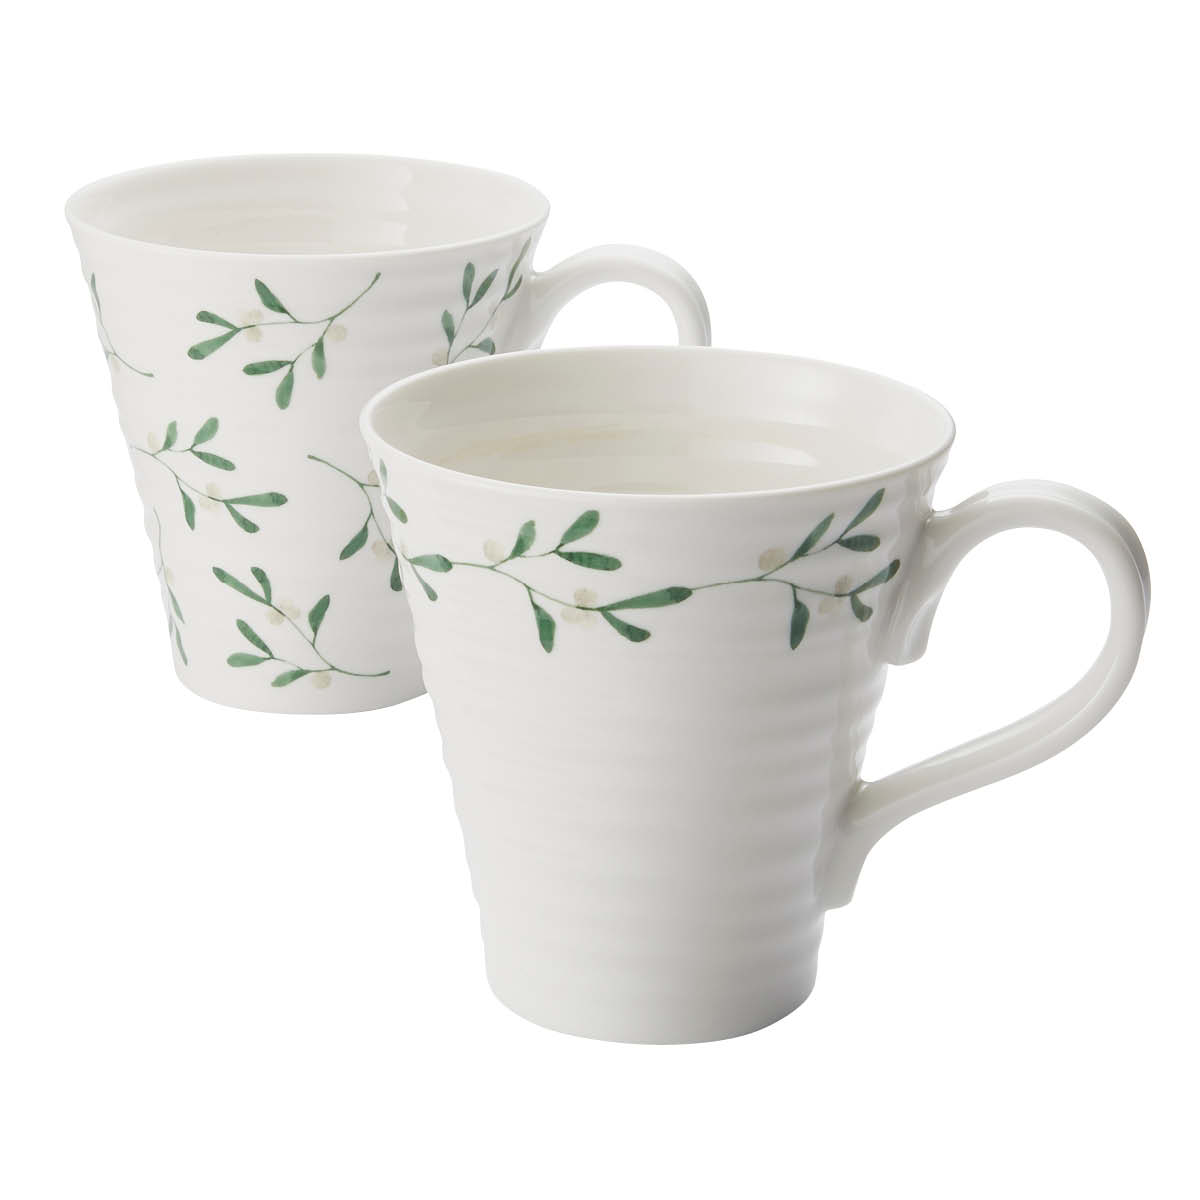 Sophie Conran Mistletoe Set of 2 Mugs